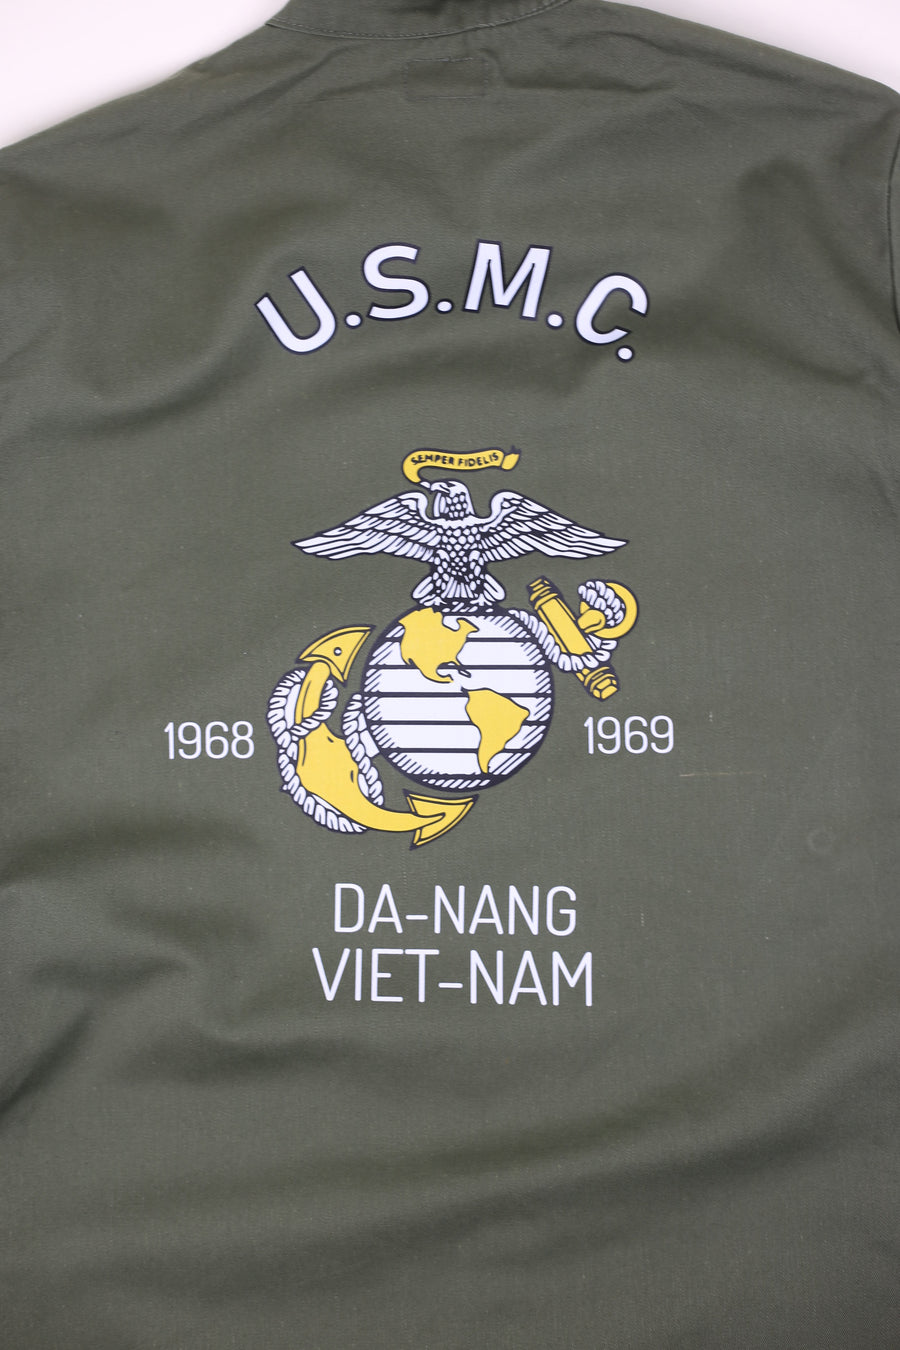 Og 507 Us ARMY shirt - M -